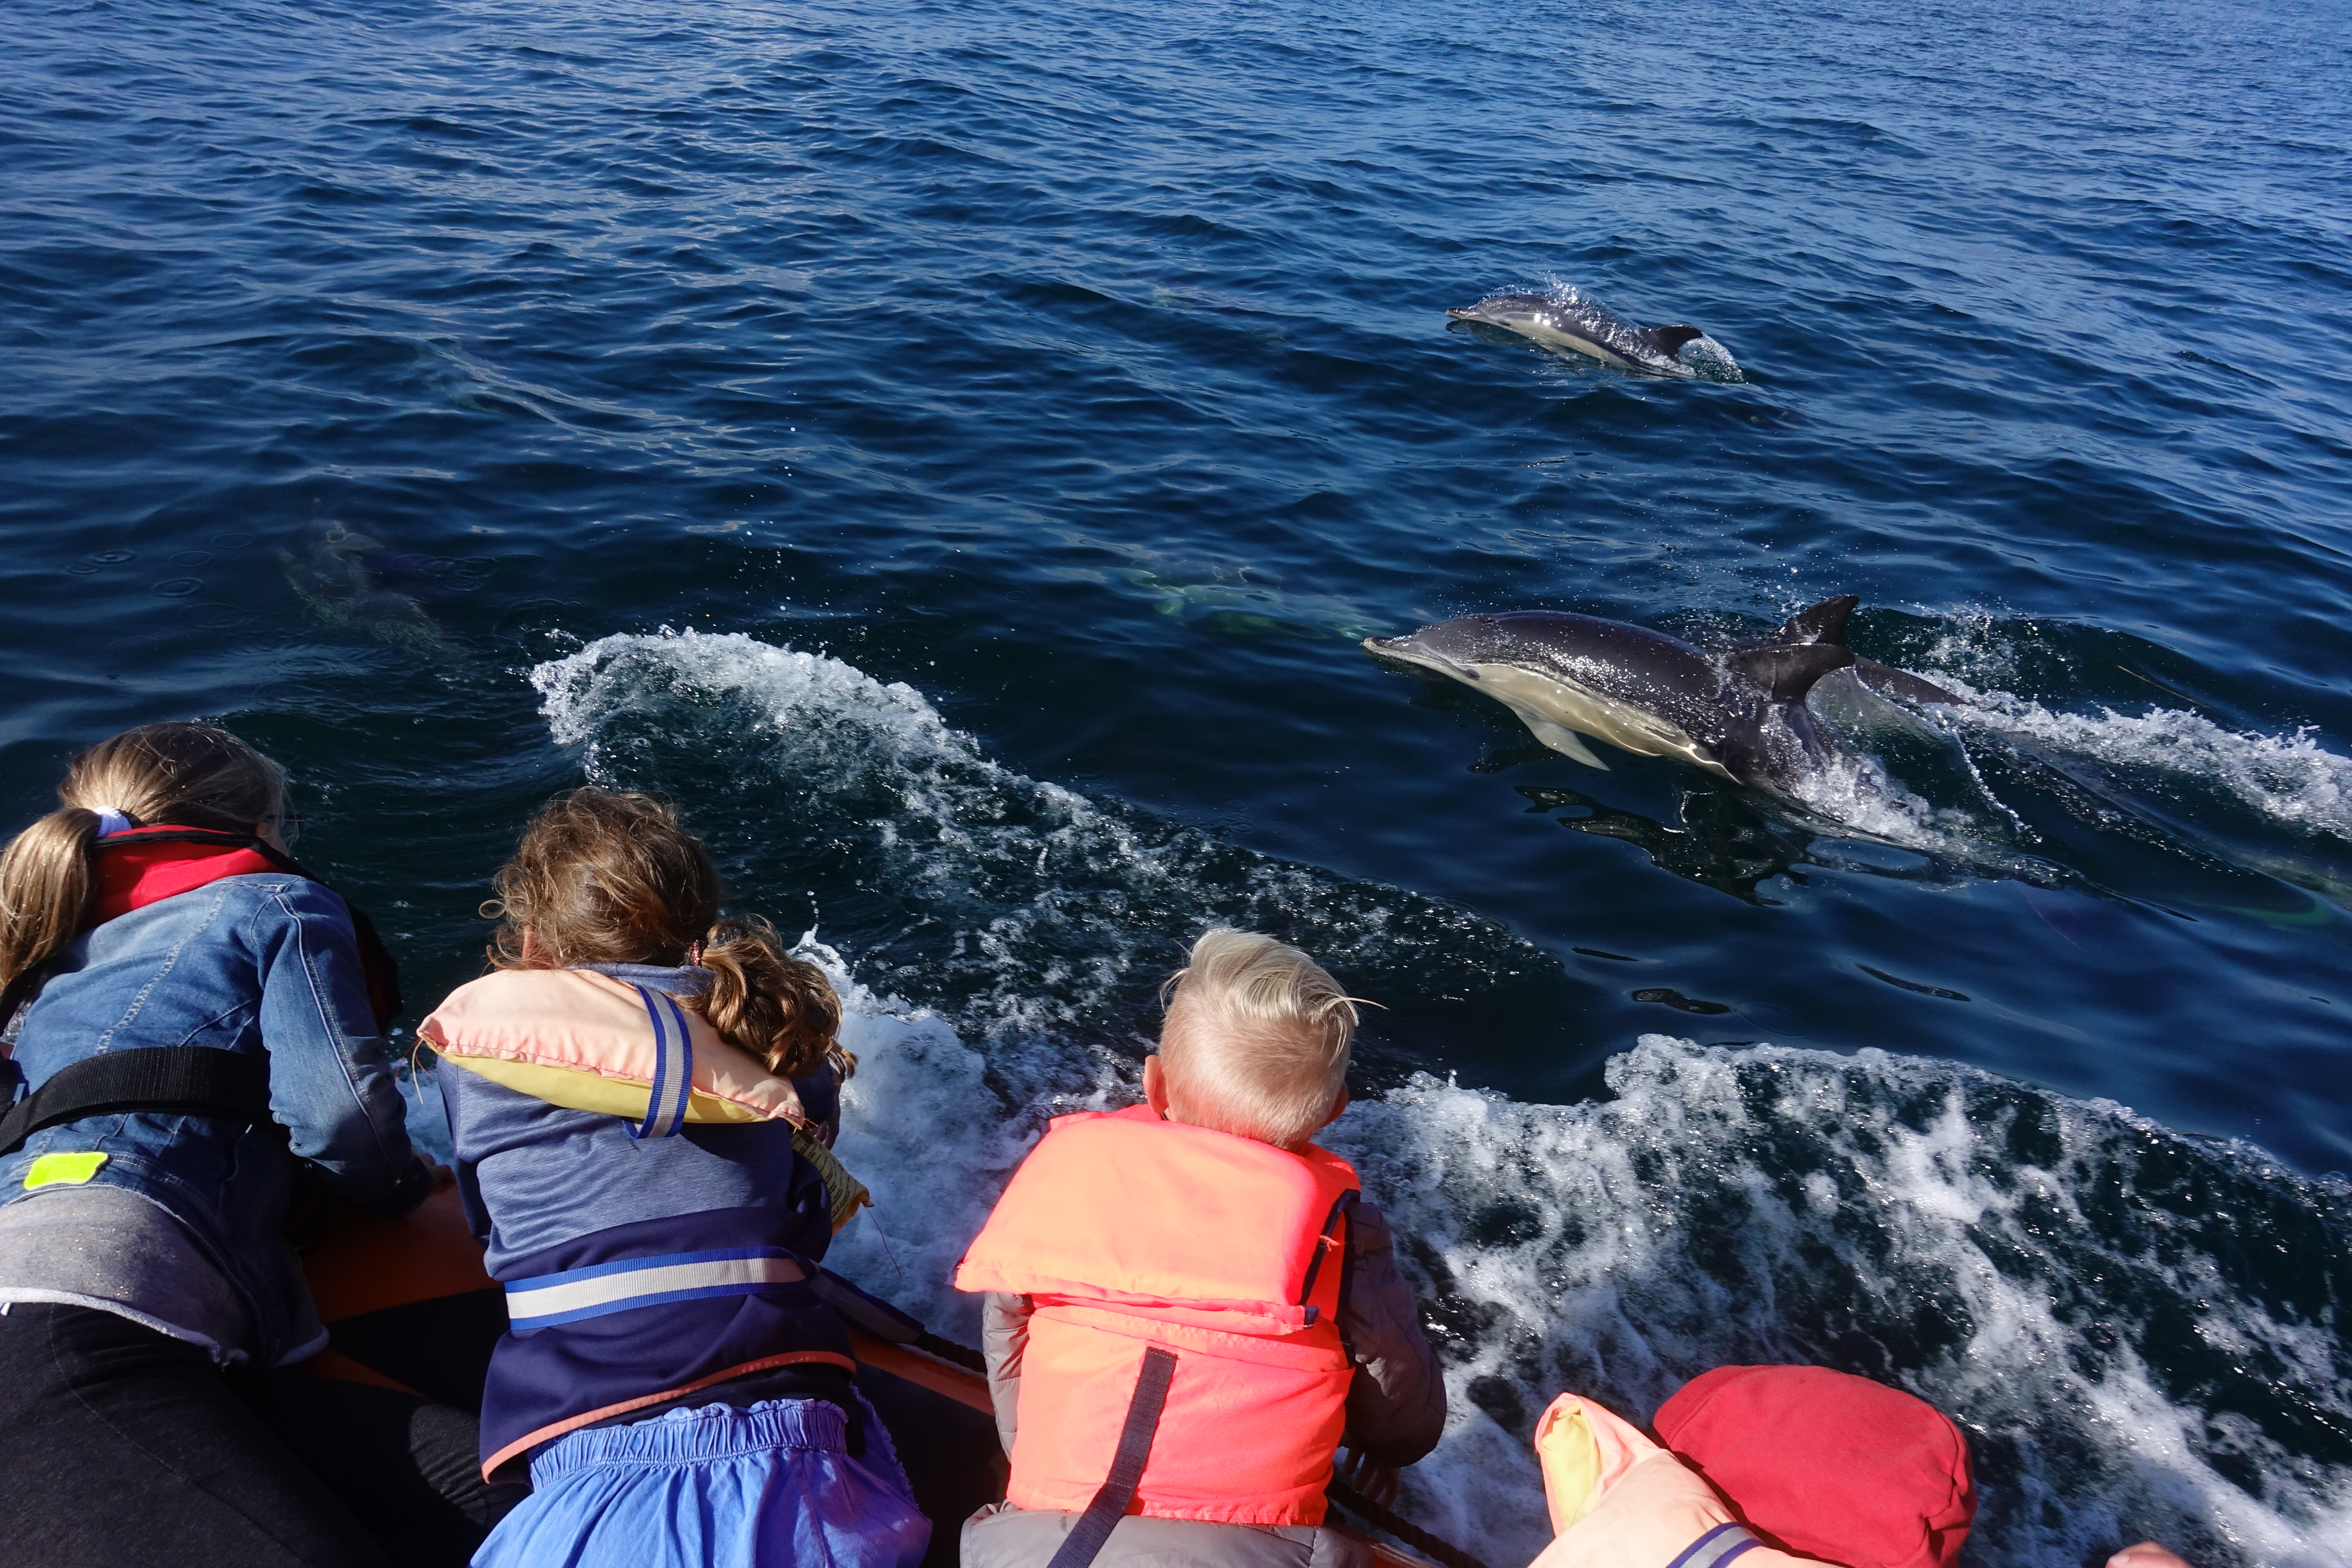 Dolphin, Whale & Bird watching in Lisbon